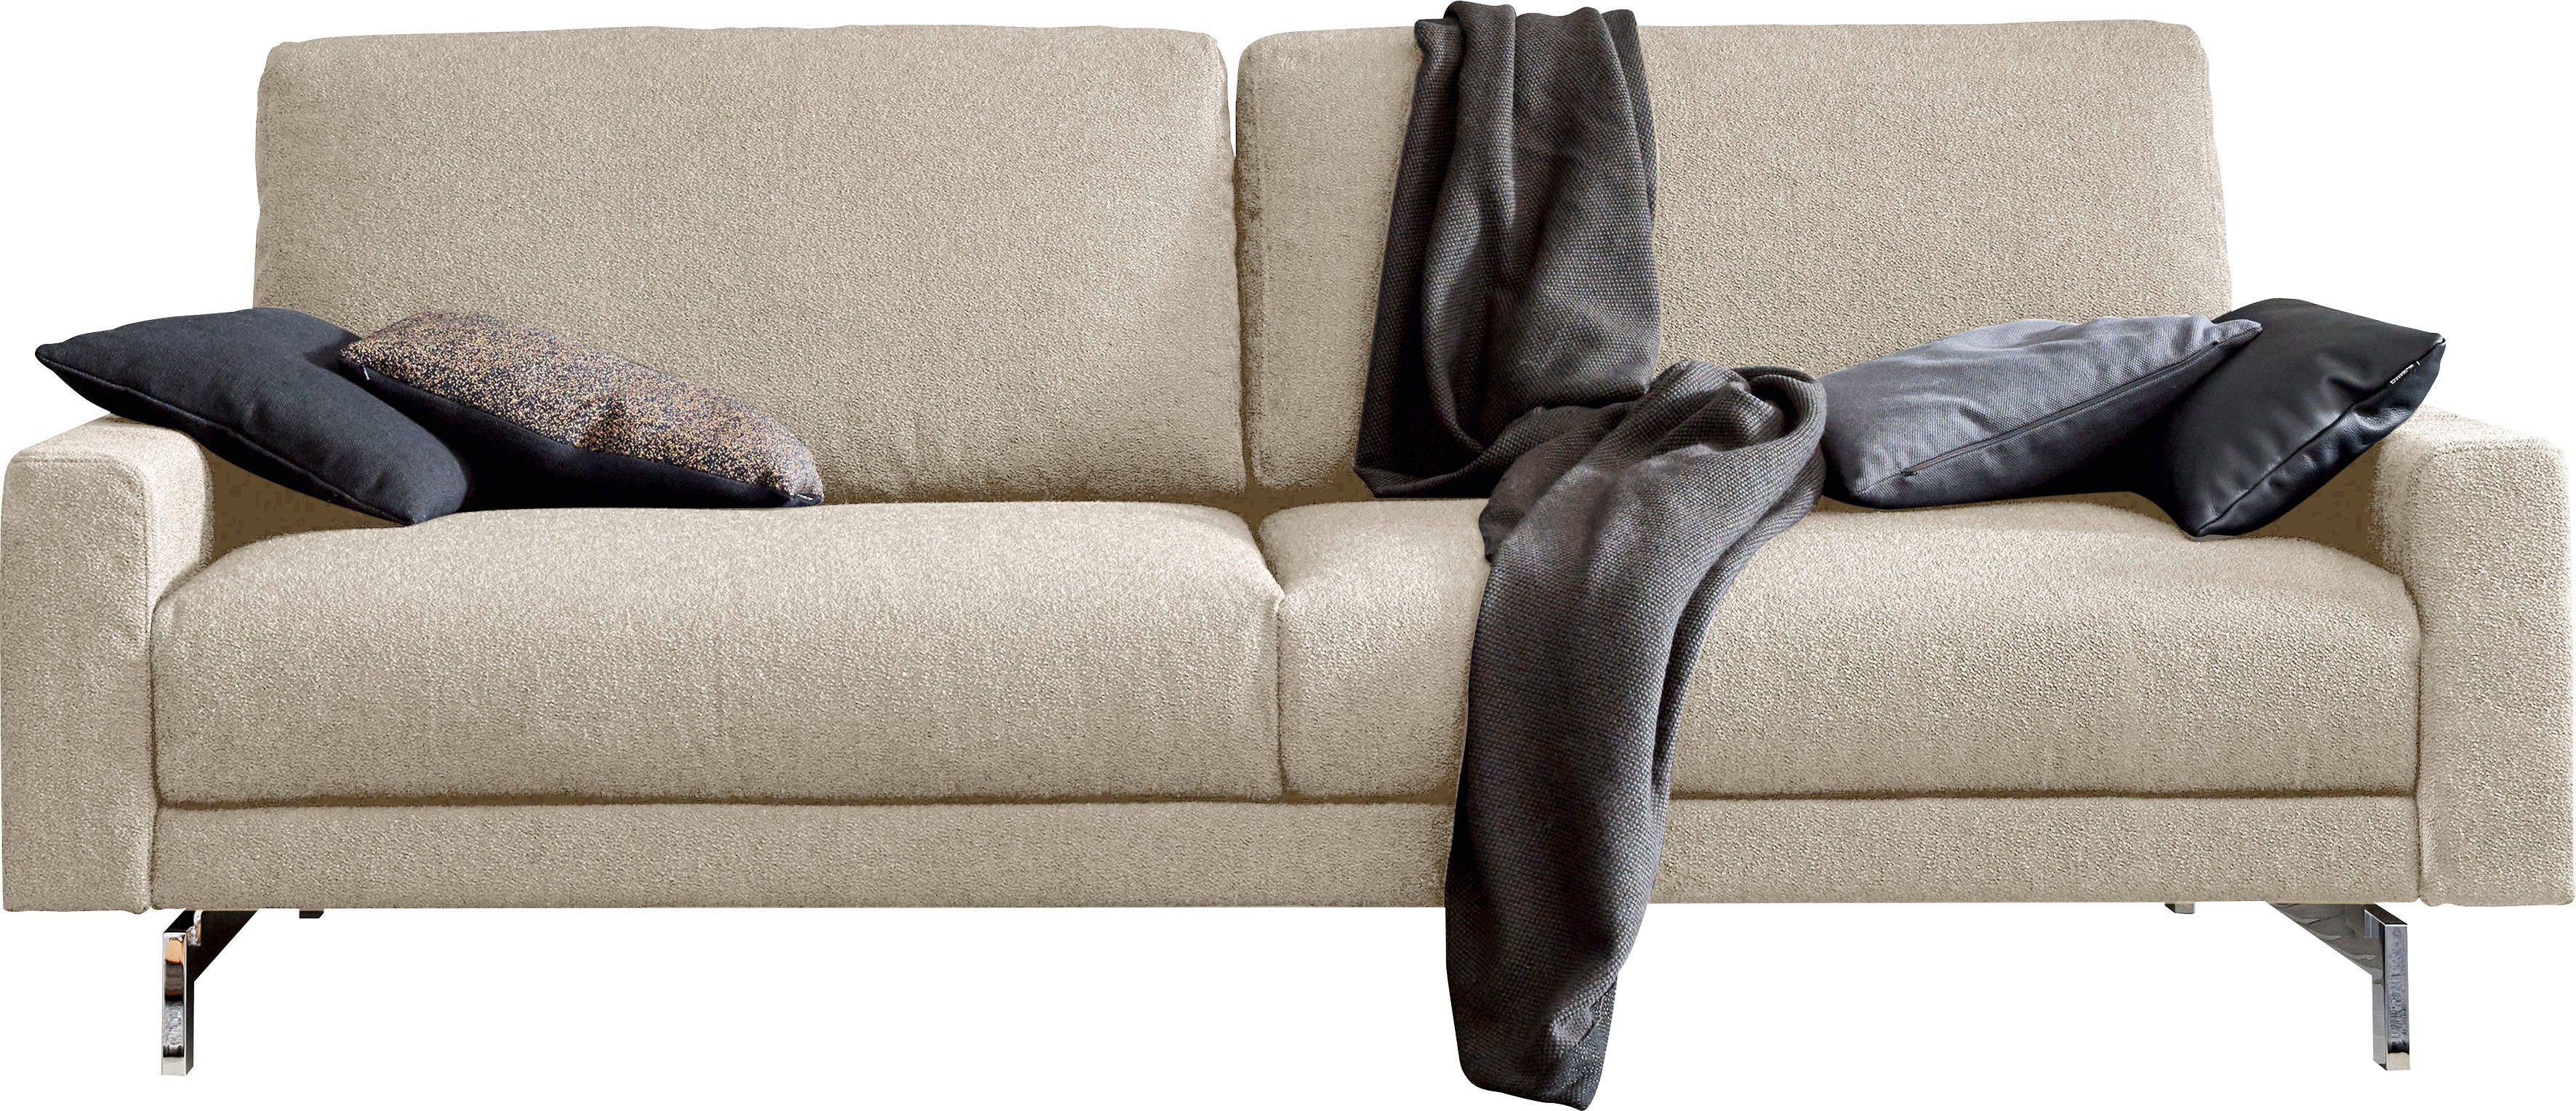 164 sofa hs.450, Breite glänzend, cm hülsta niedrig, 2-Sitzer Armlehne chromfarben Fuß